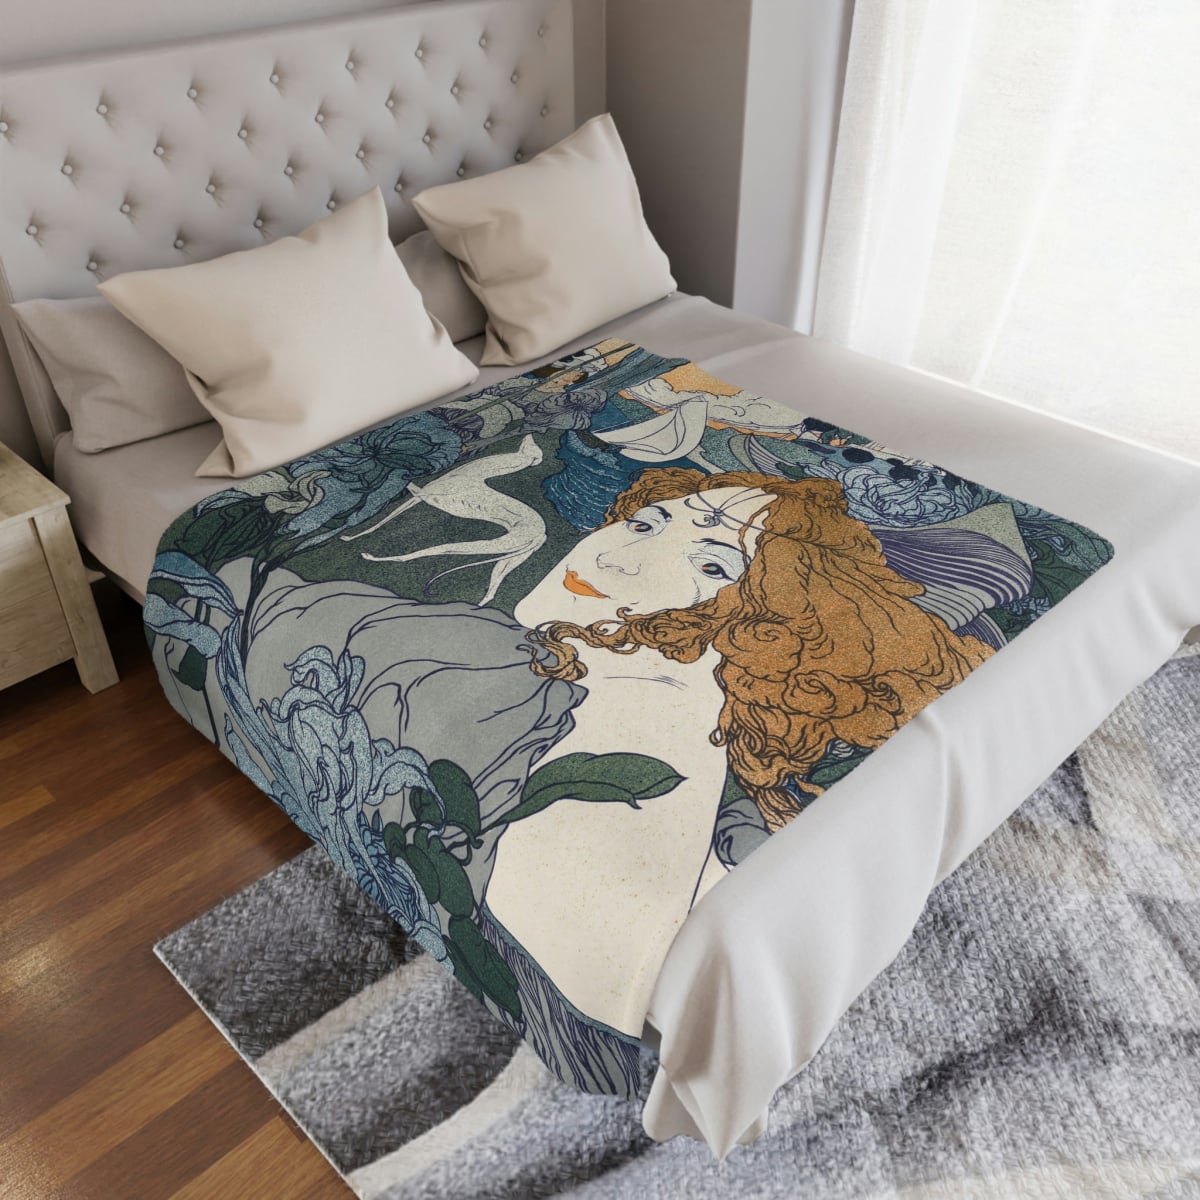 Cozy Elegance Bedding - Premium Art-Inspired Blanket